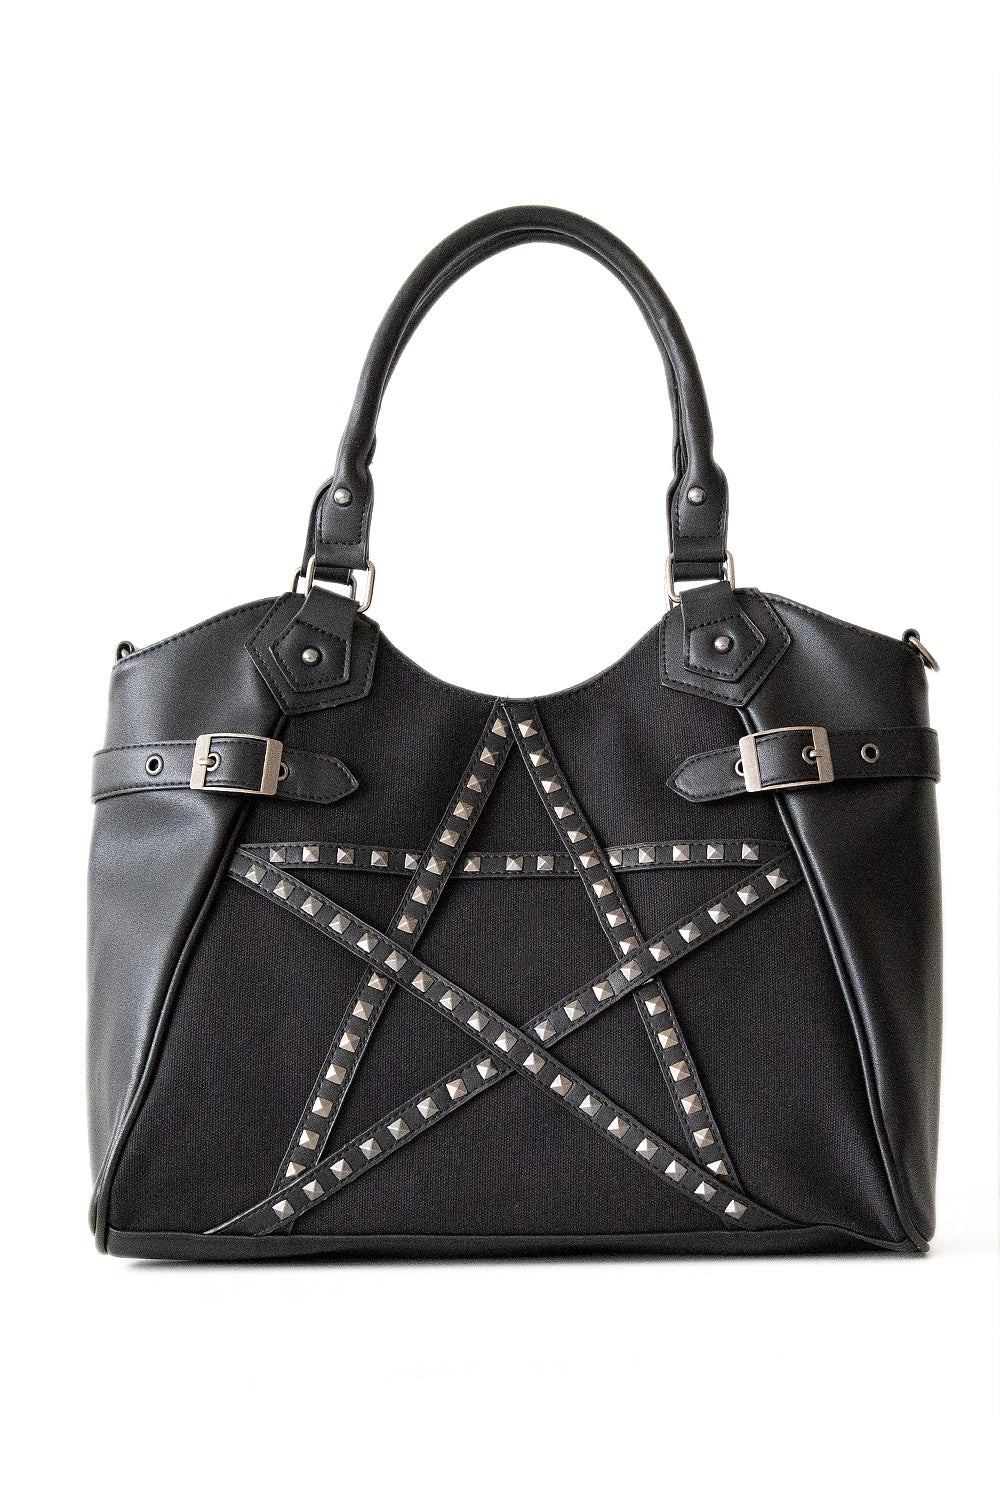 Black handbag with studded pentagram feature.